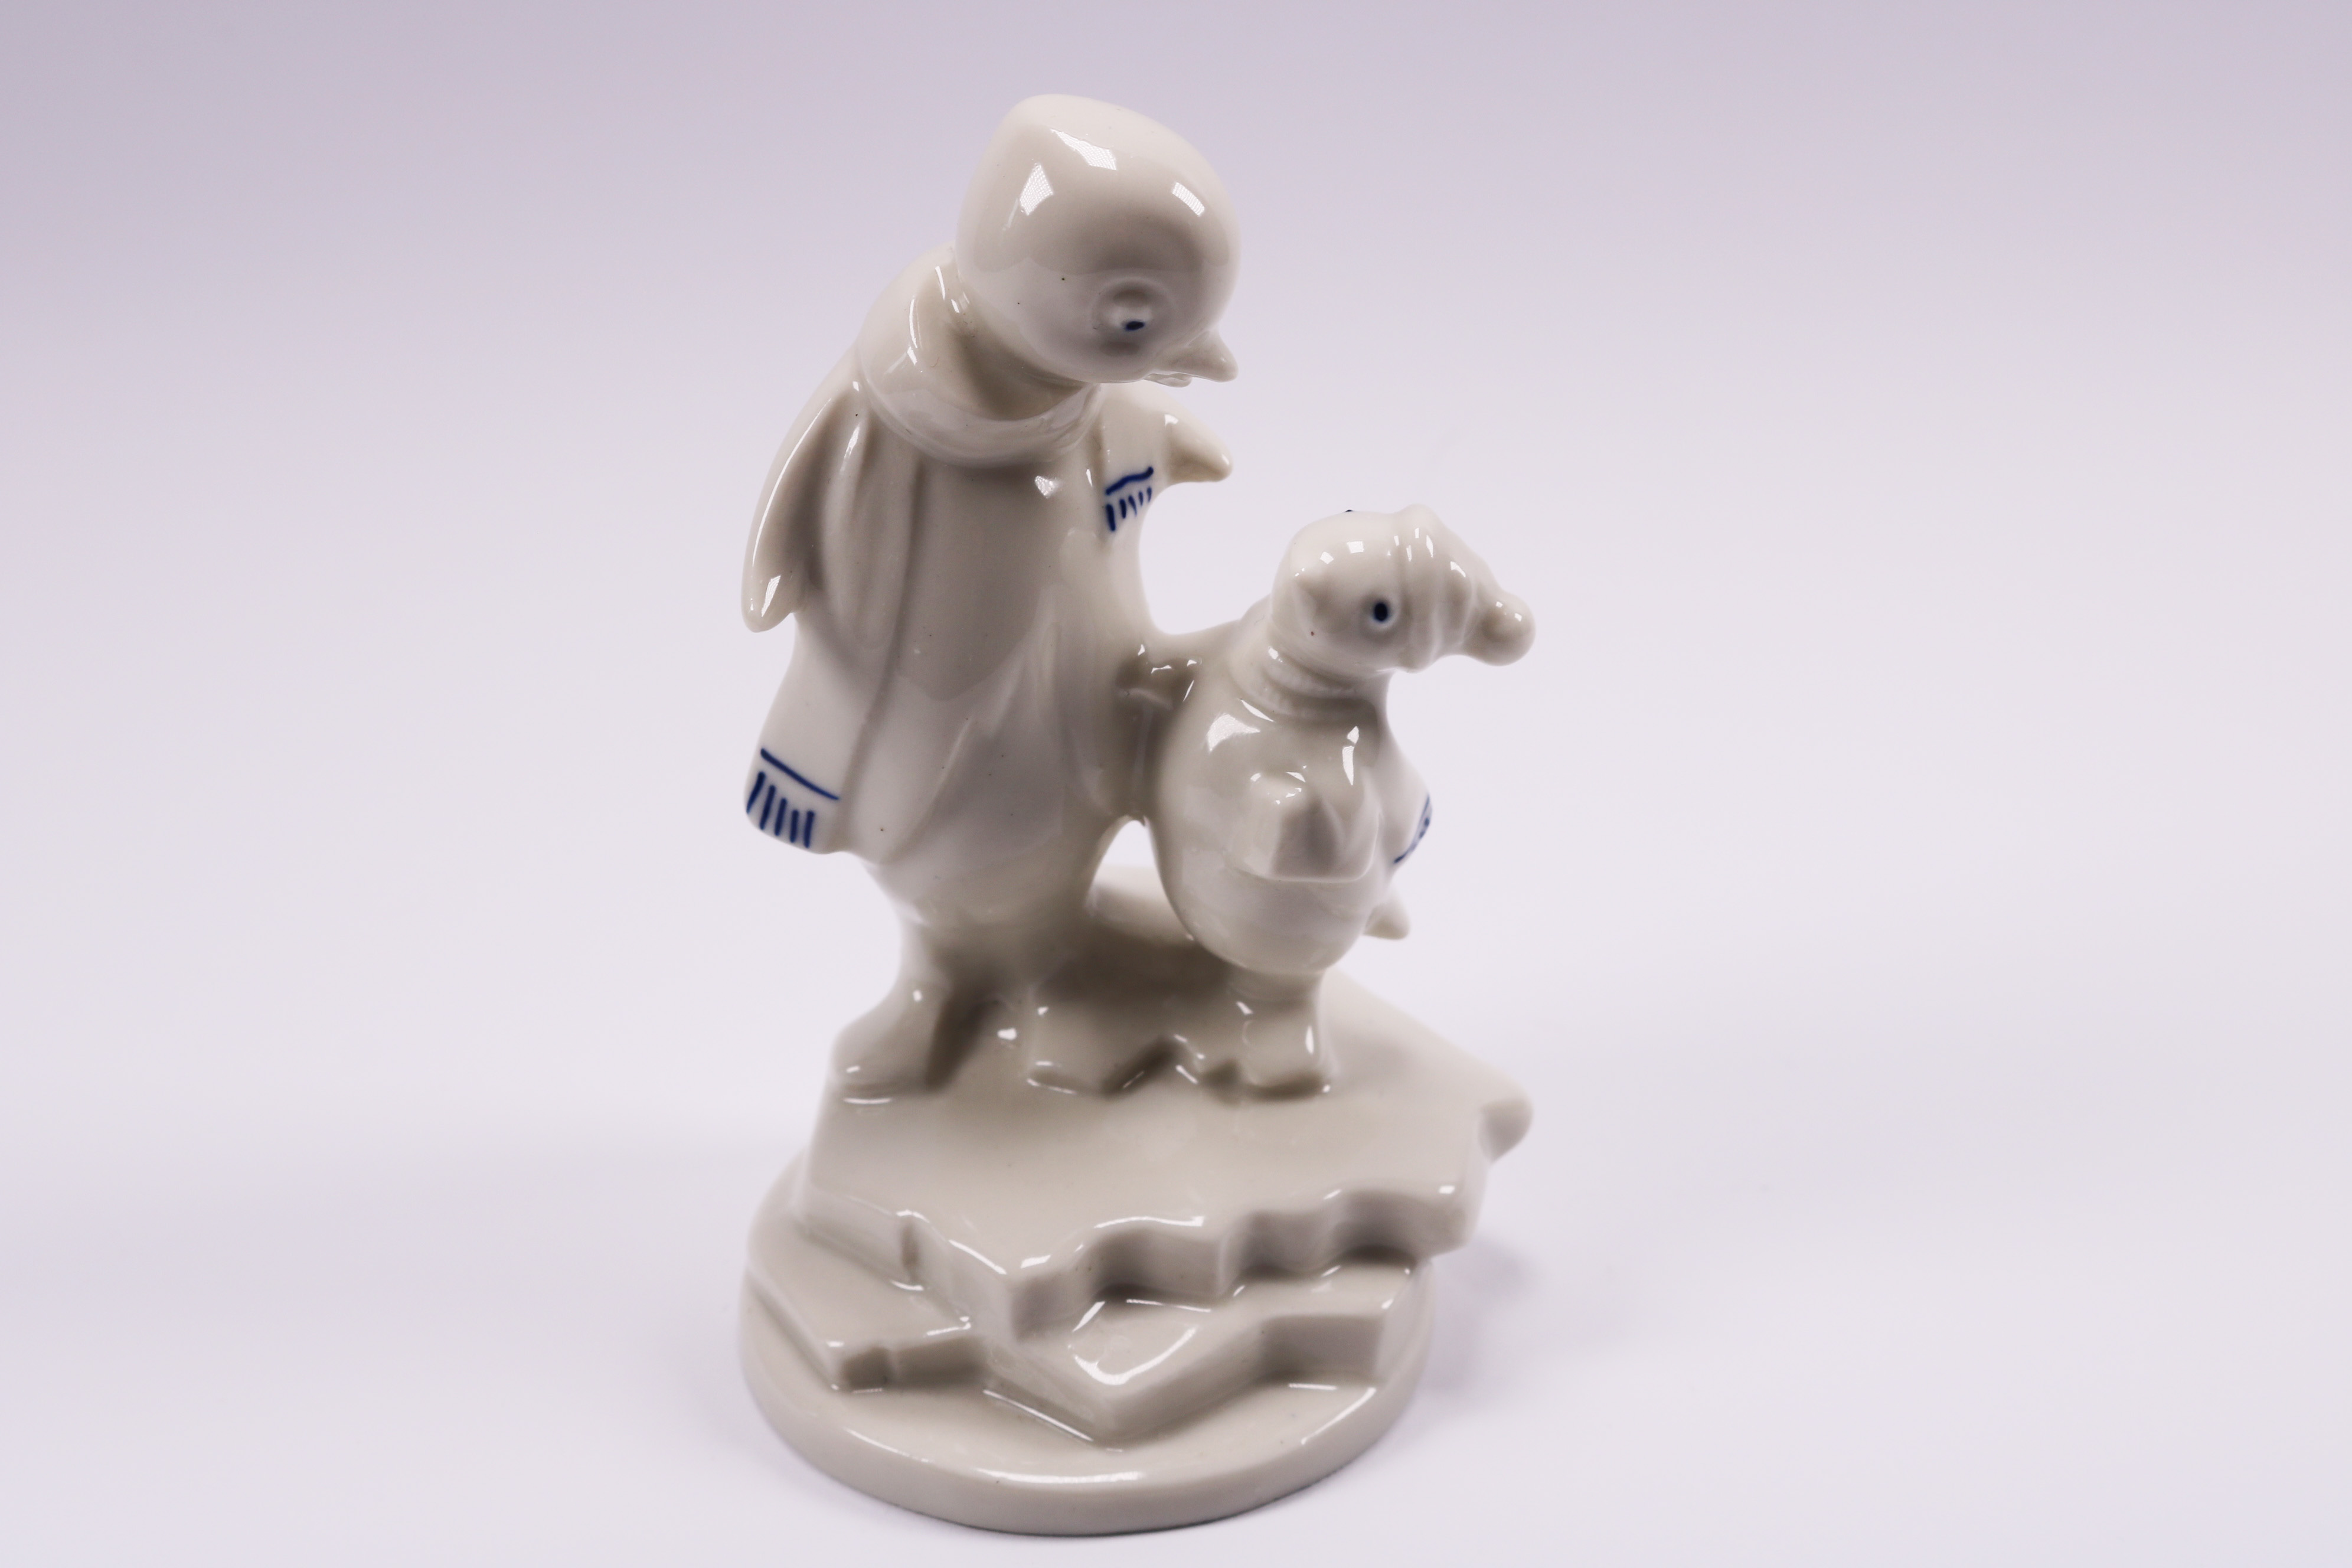 Penguin Figurine Stamped Made In Spain Collectors Item Fine Porcelain Gift Idea